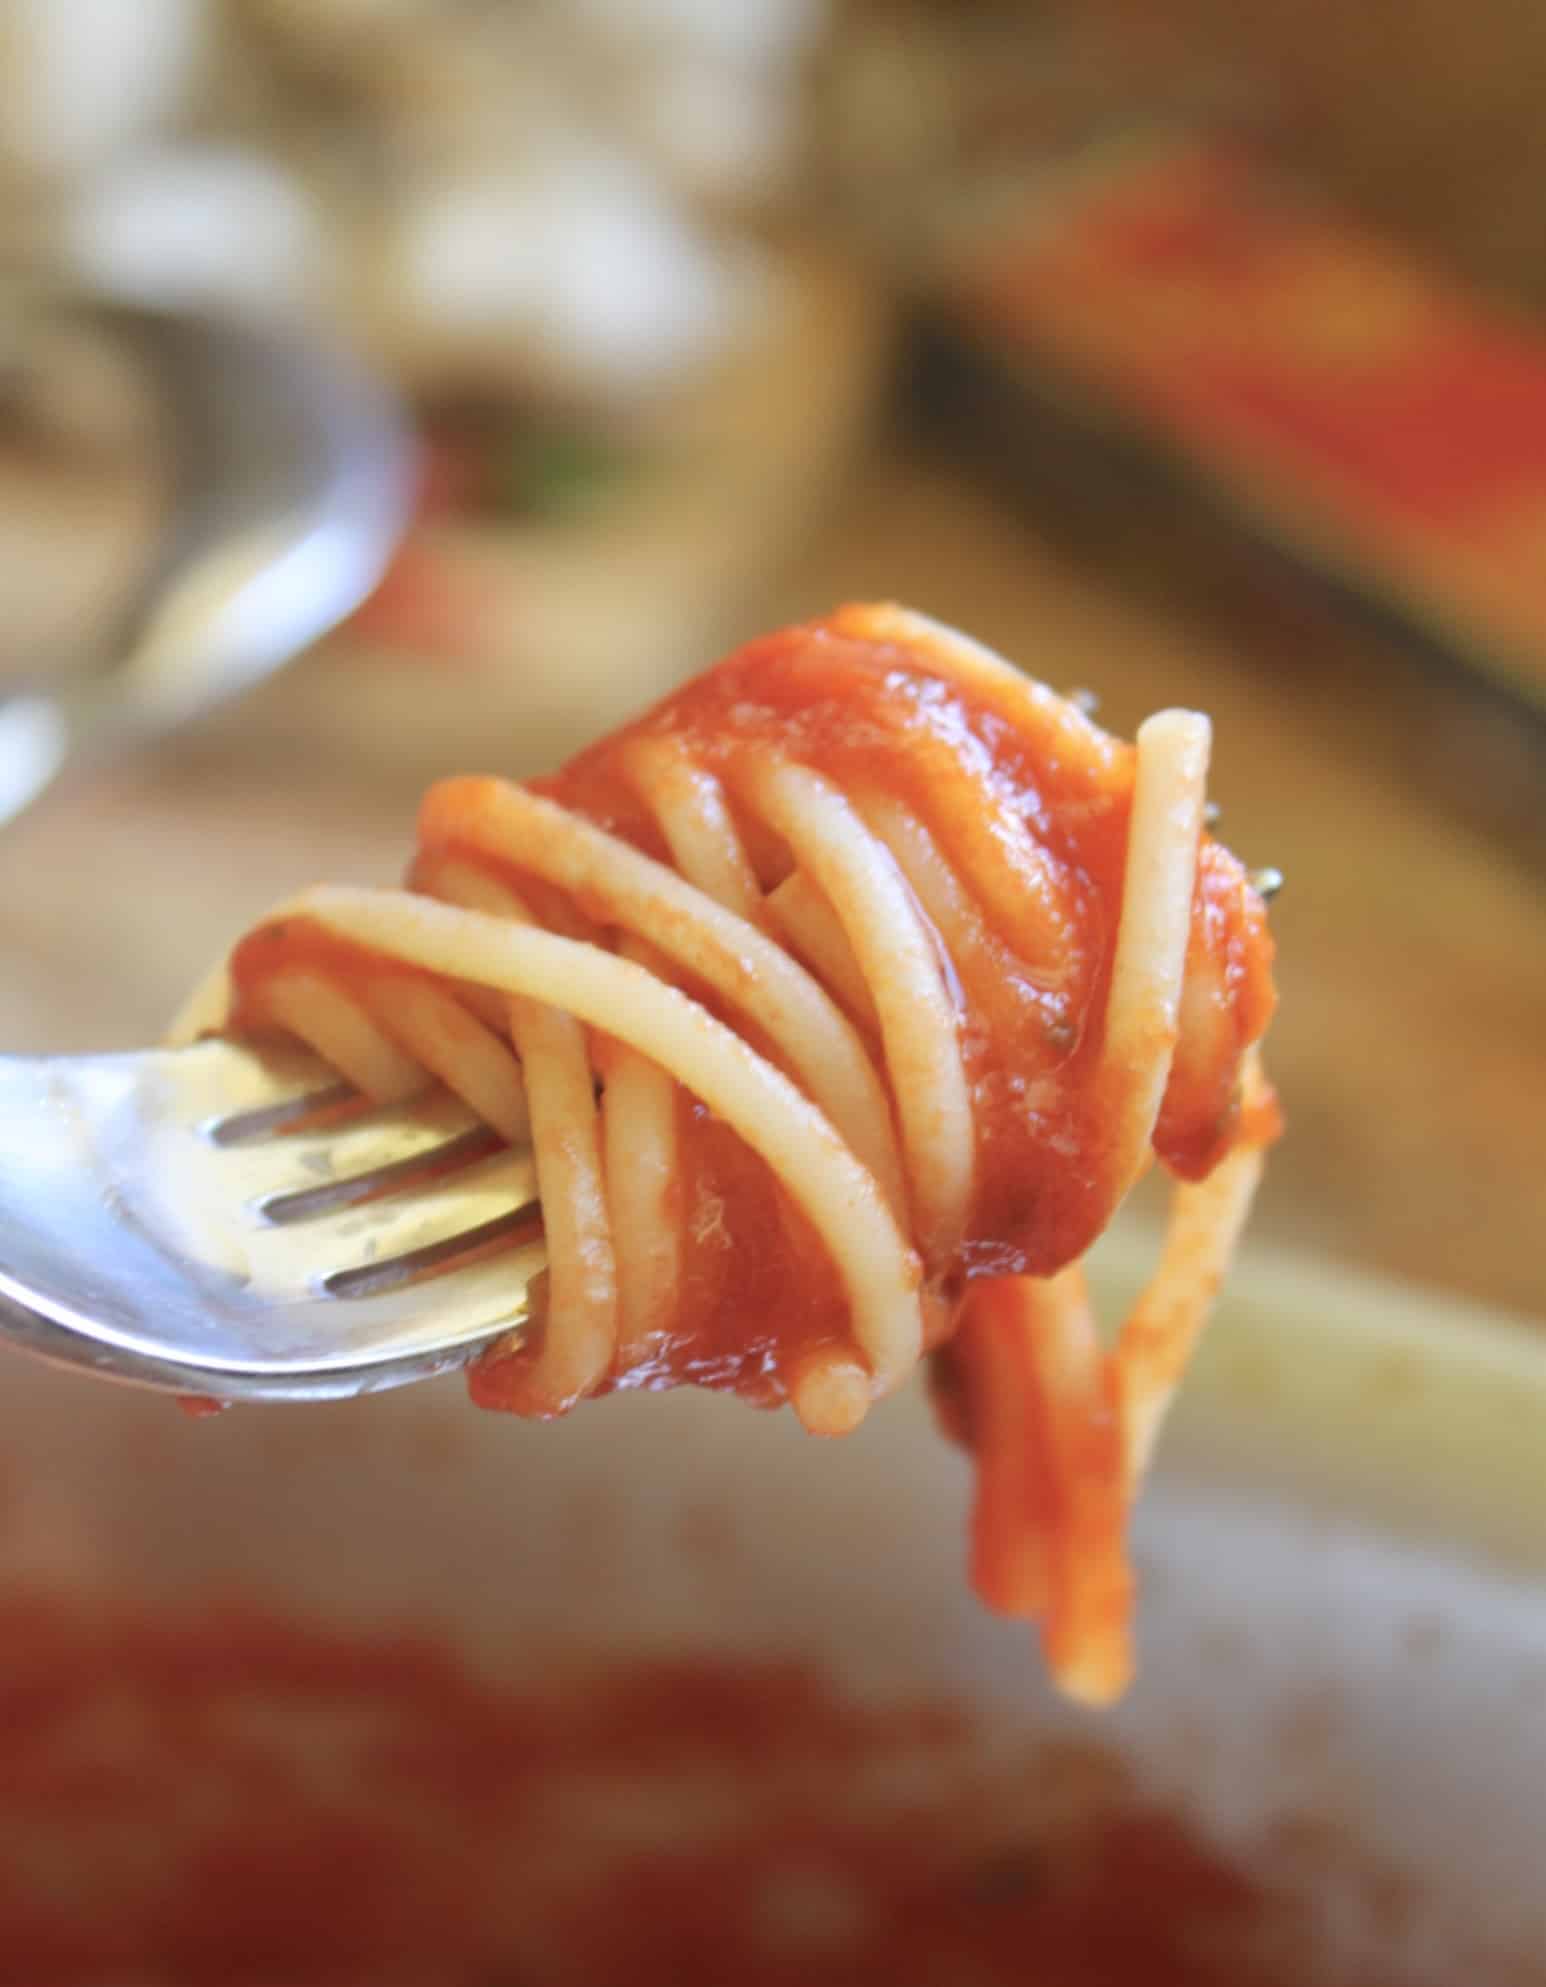 forkful of spaghetti